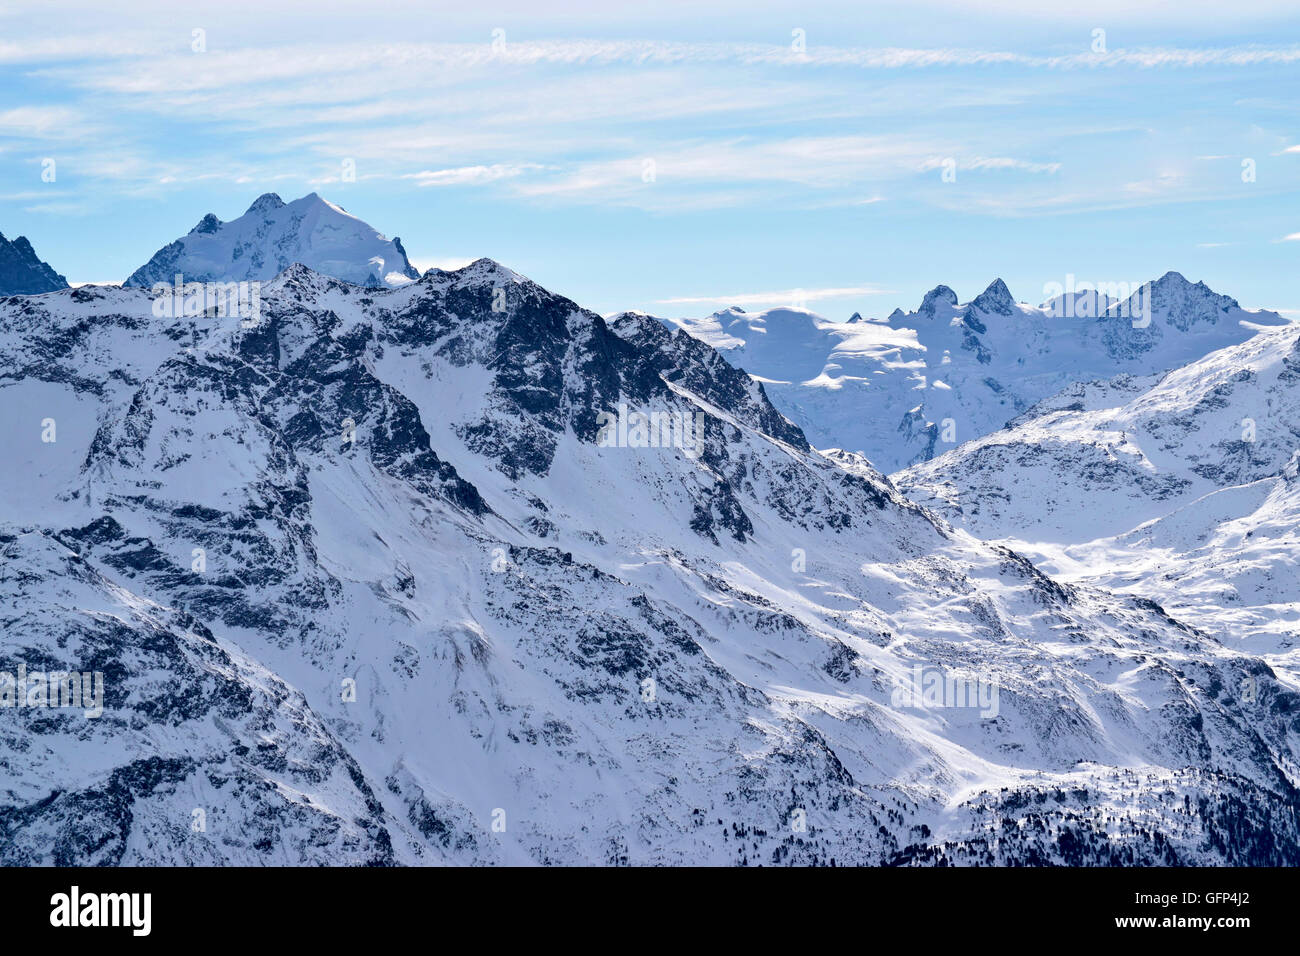 Snowy mountains in Switzerland, St.Moritz - Swiss Alps Stock Photo